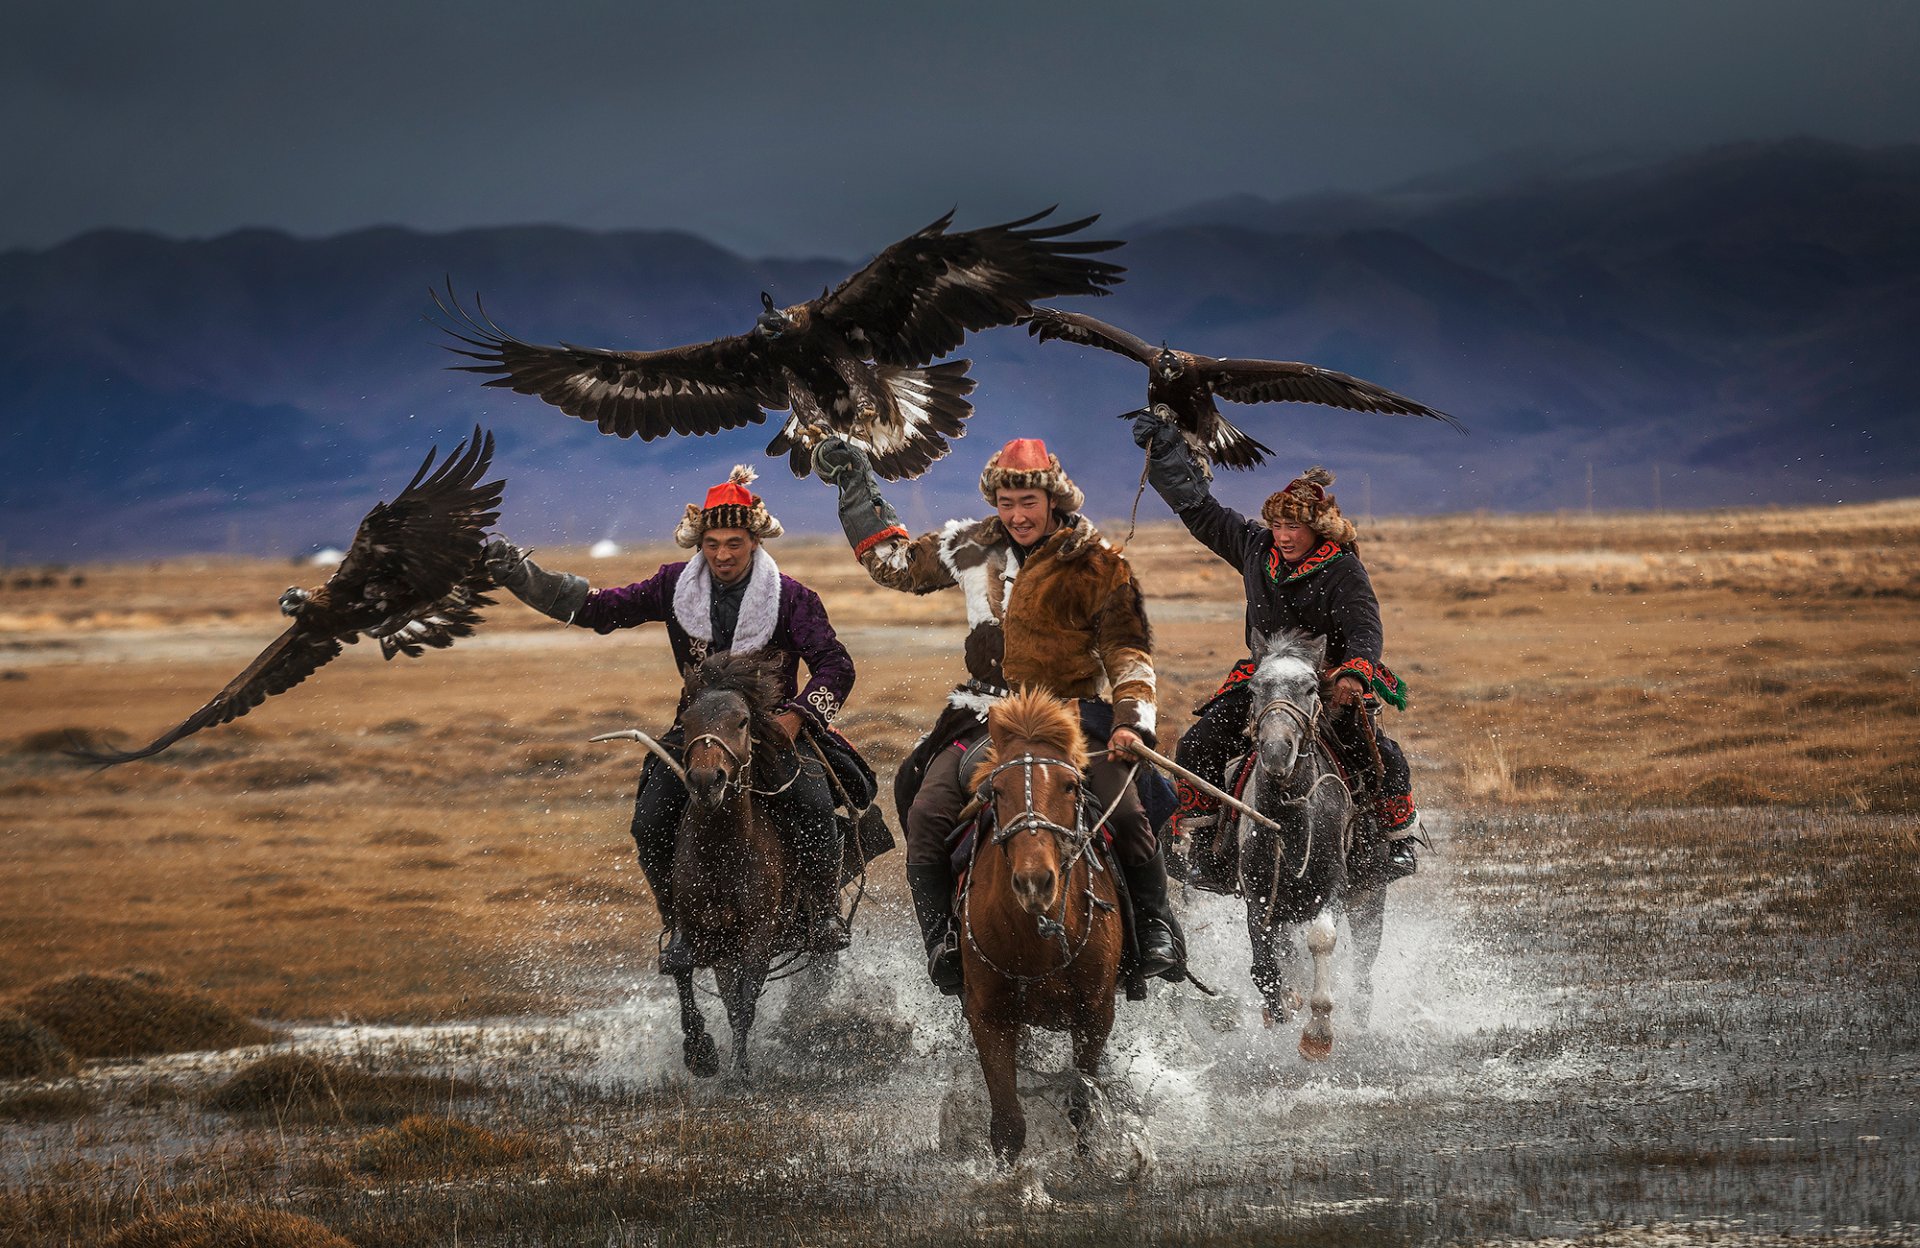  Das Adlerfestival in Mongolei